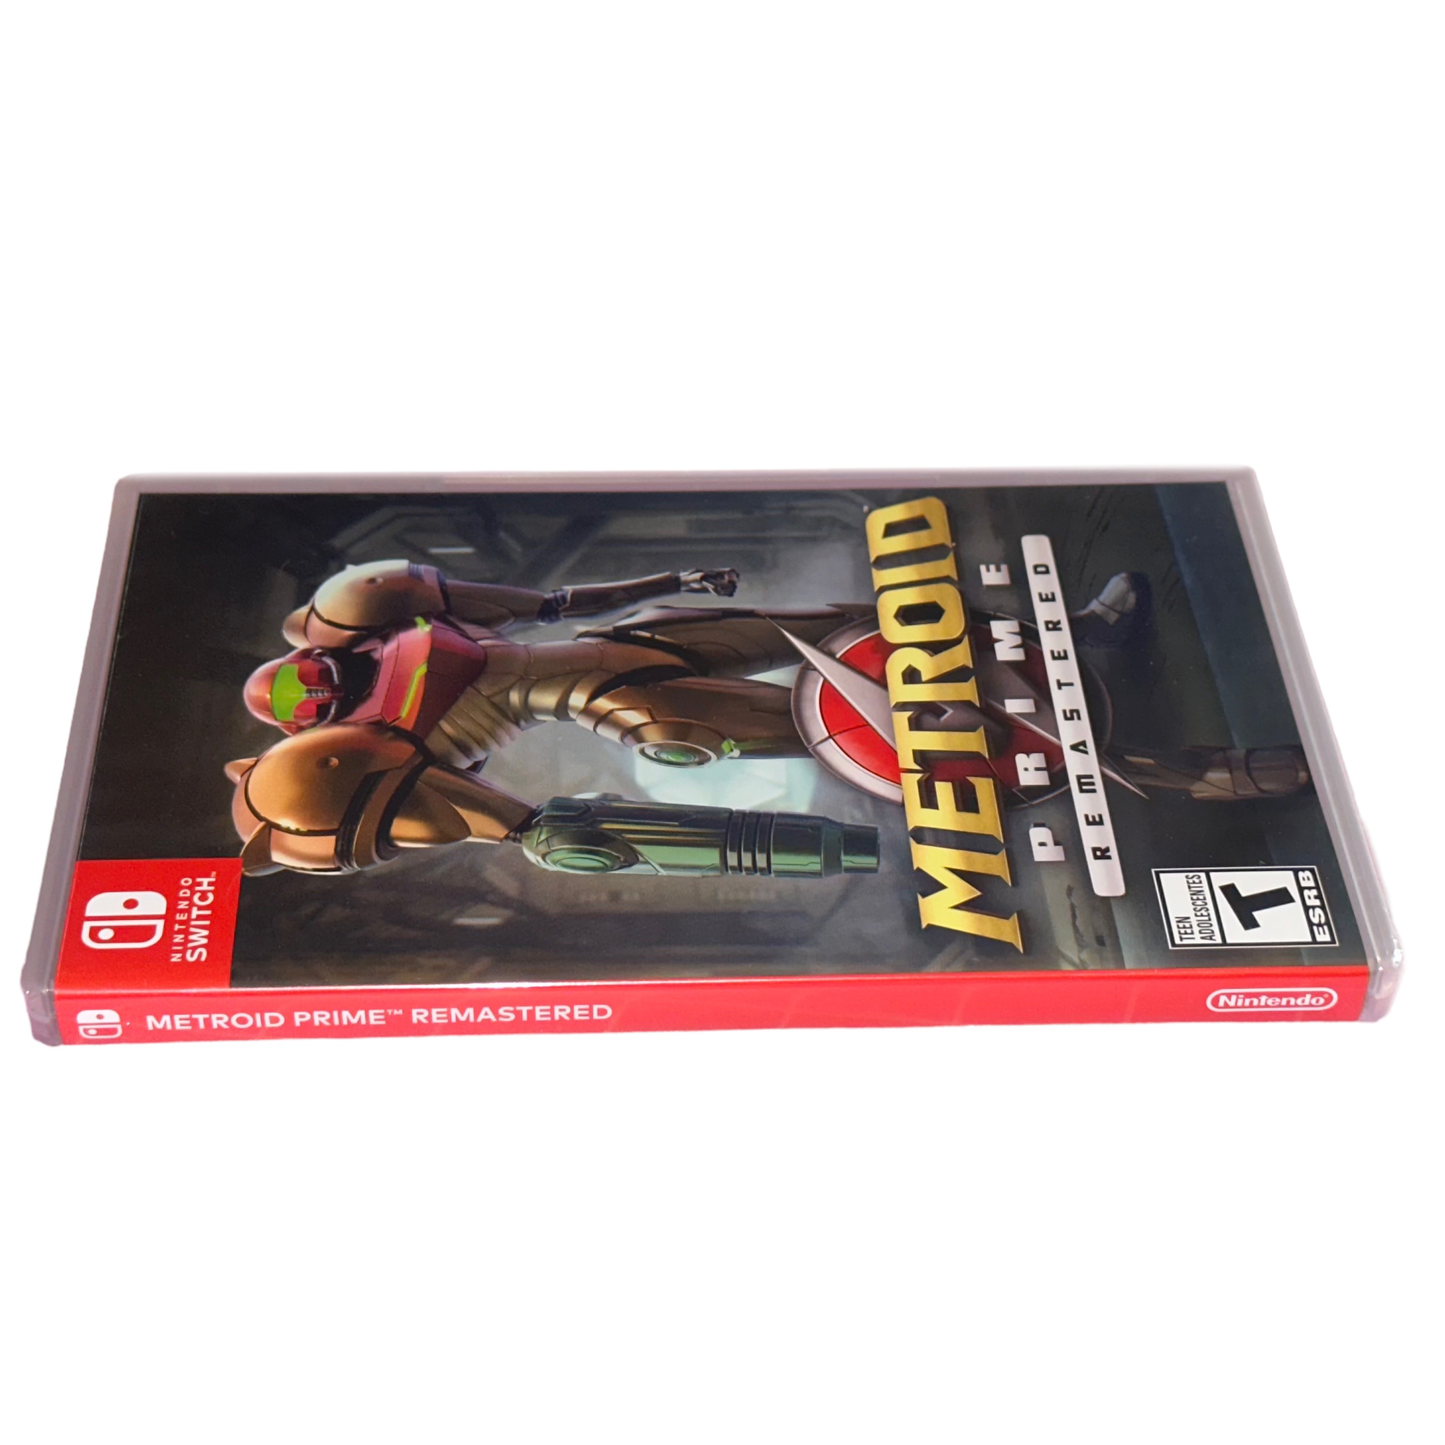 Metroid Prime Remastered (Nintendo Switch, NSW) BRAND NEW - USA Version - Sealed